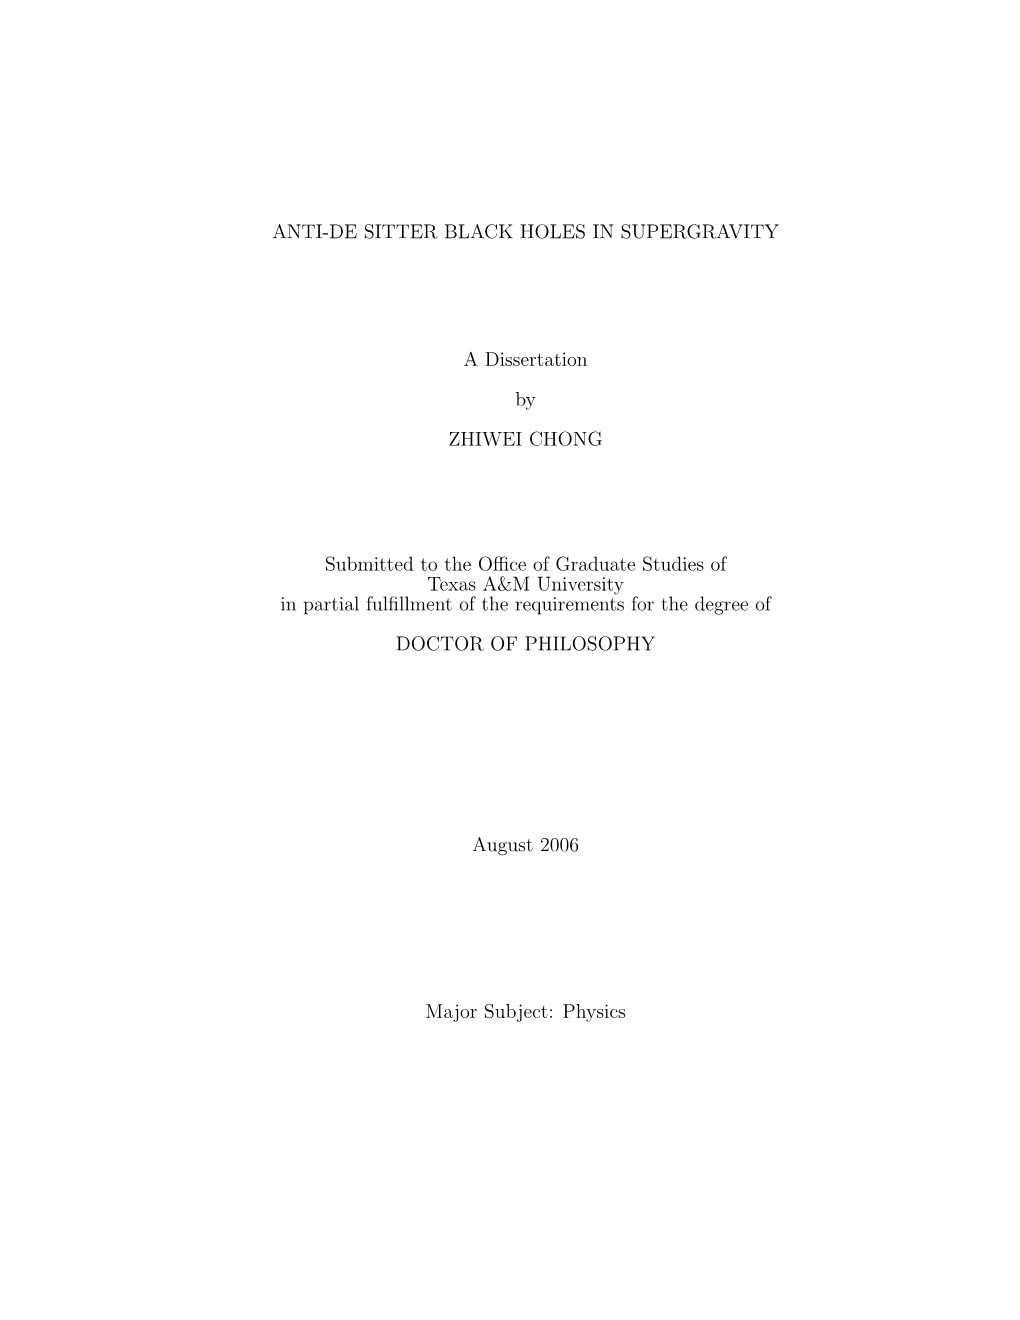 ANTI-DE SITTER BLACK HOLES in SUPERGRAVITY a Dissertation By